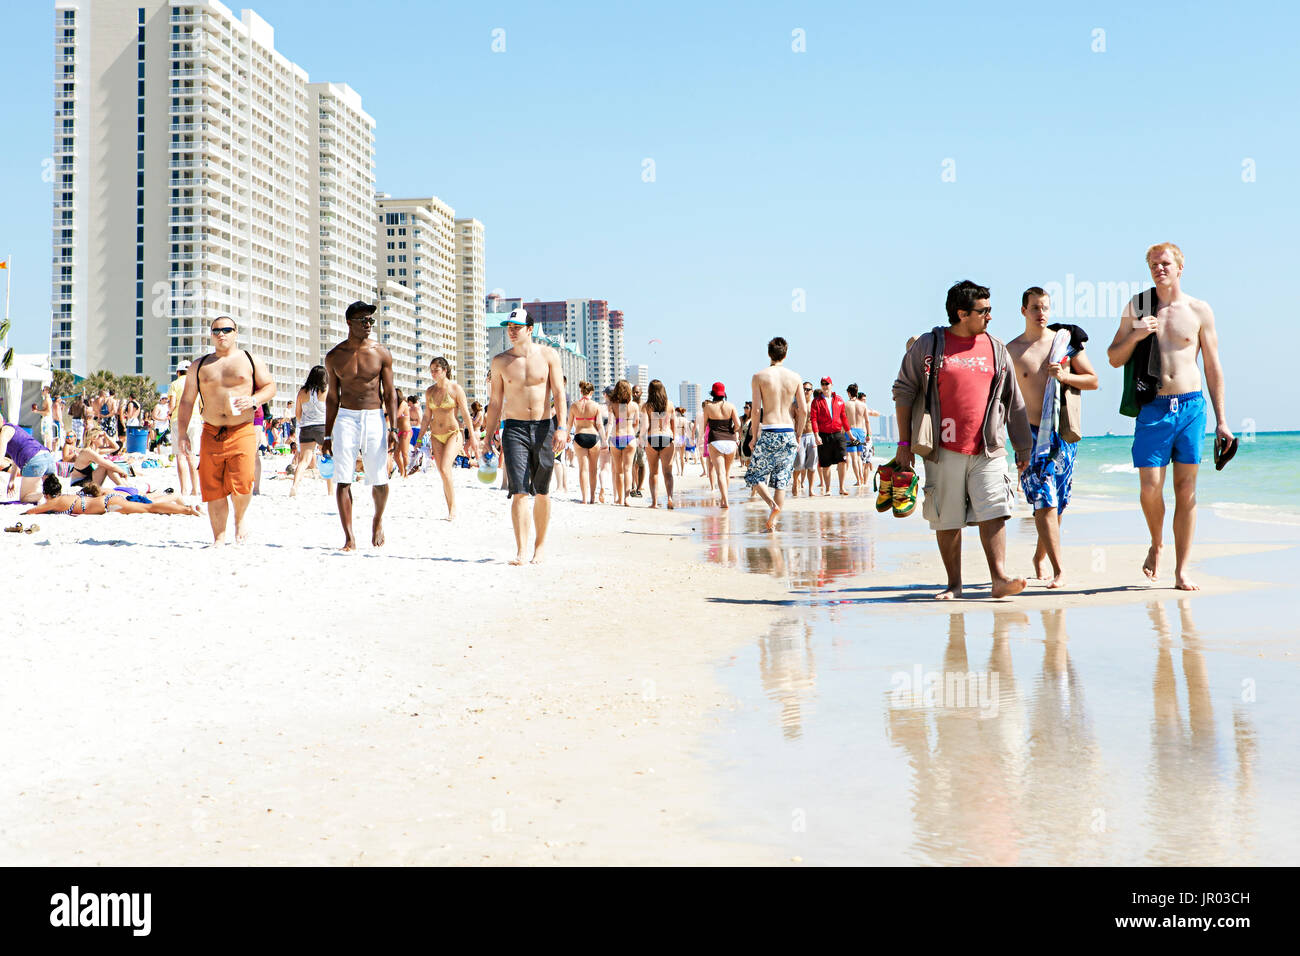 College students on spring break walking the beach. Panama City Beach, Florida 2011 Stock Photo